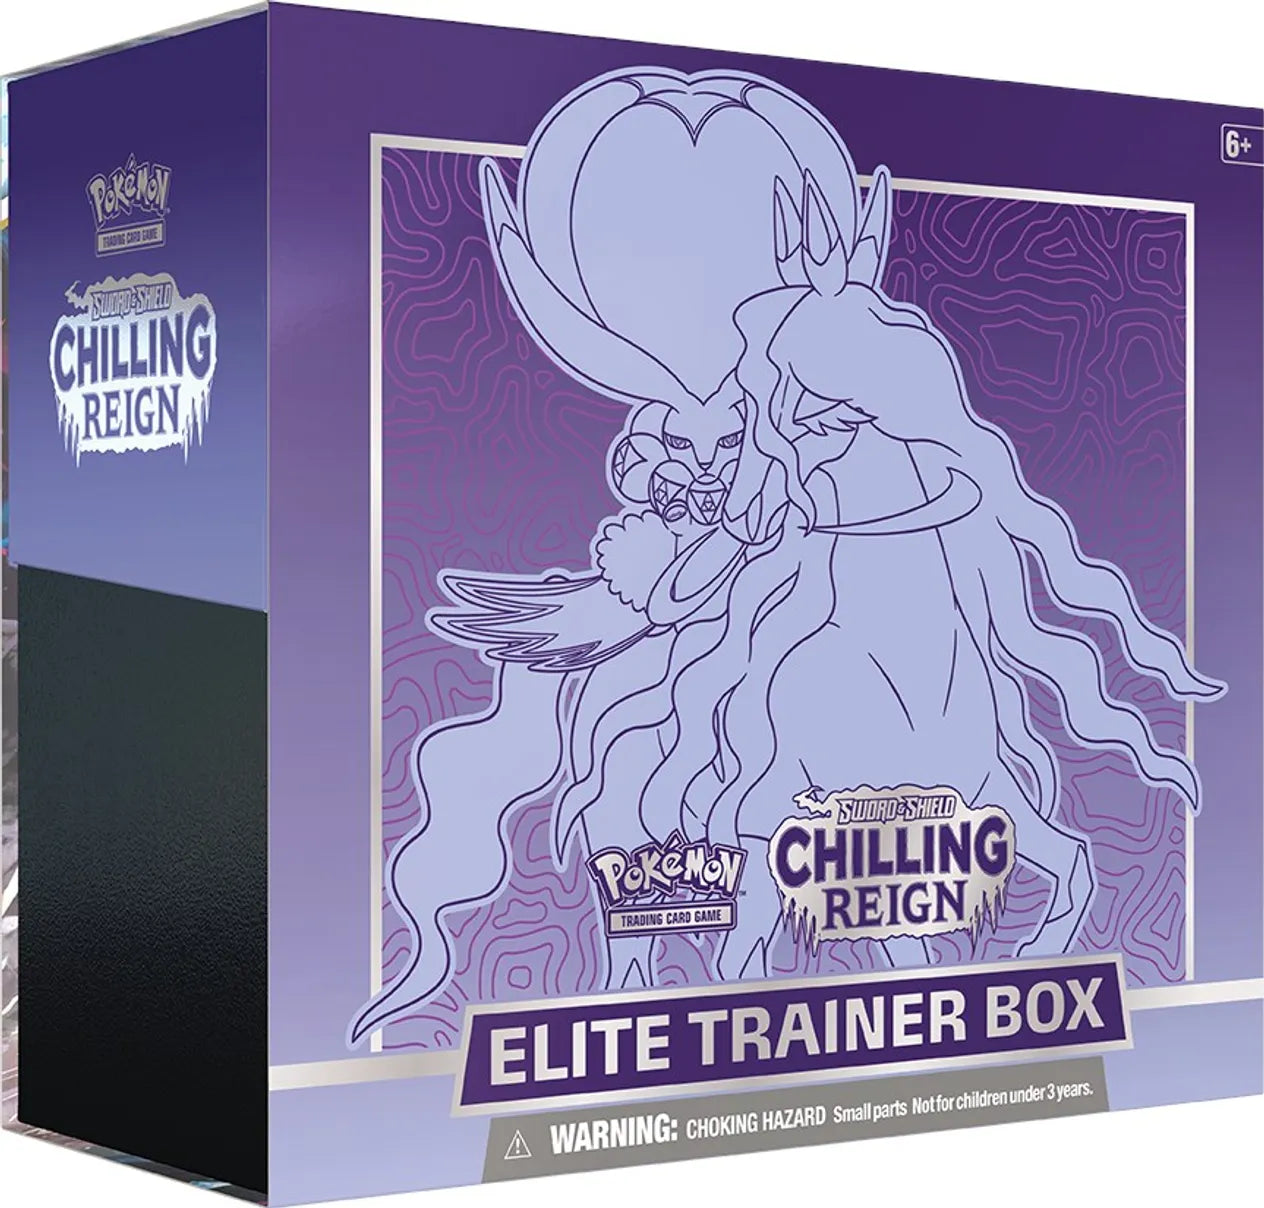 Chilling Reign Pokemon Elite Trainer Box